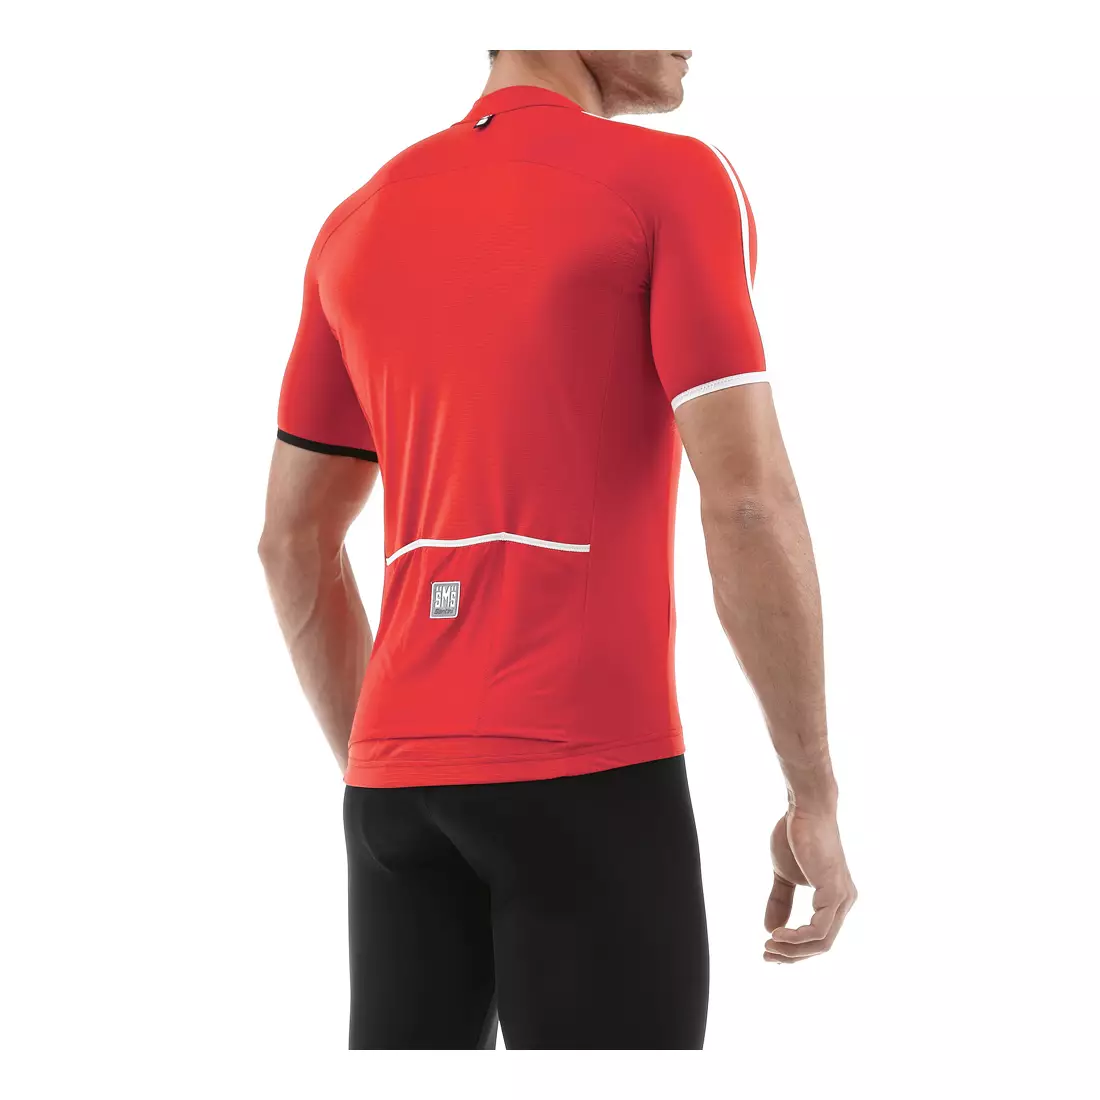 SANTINI TEMPO - men's cycling jersey